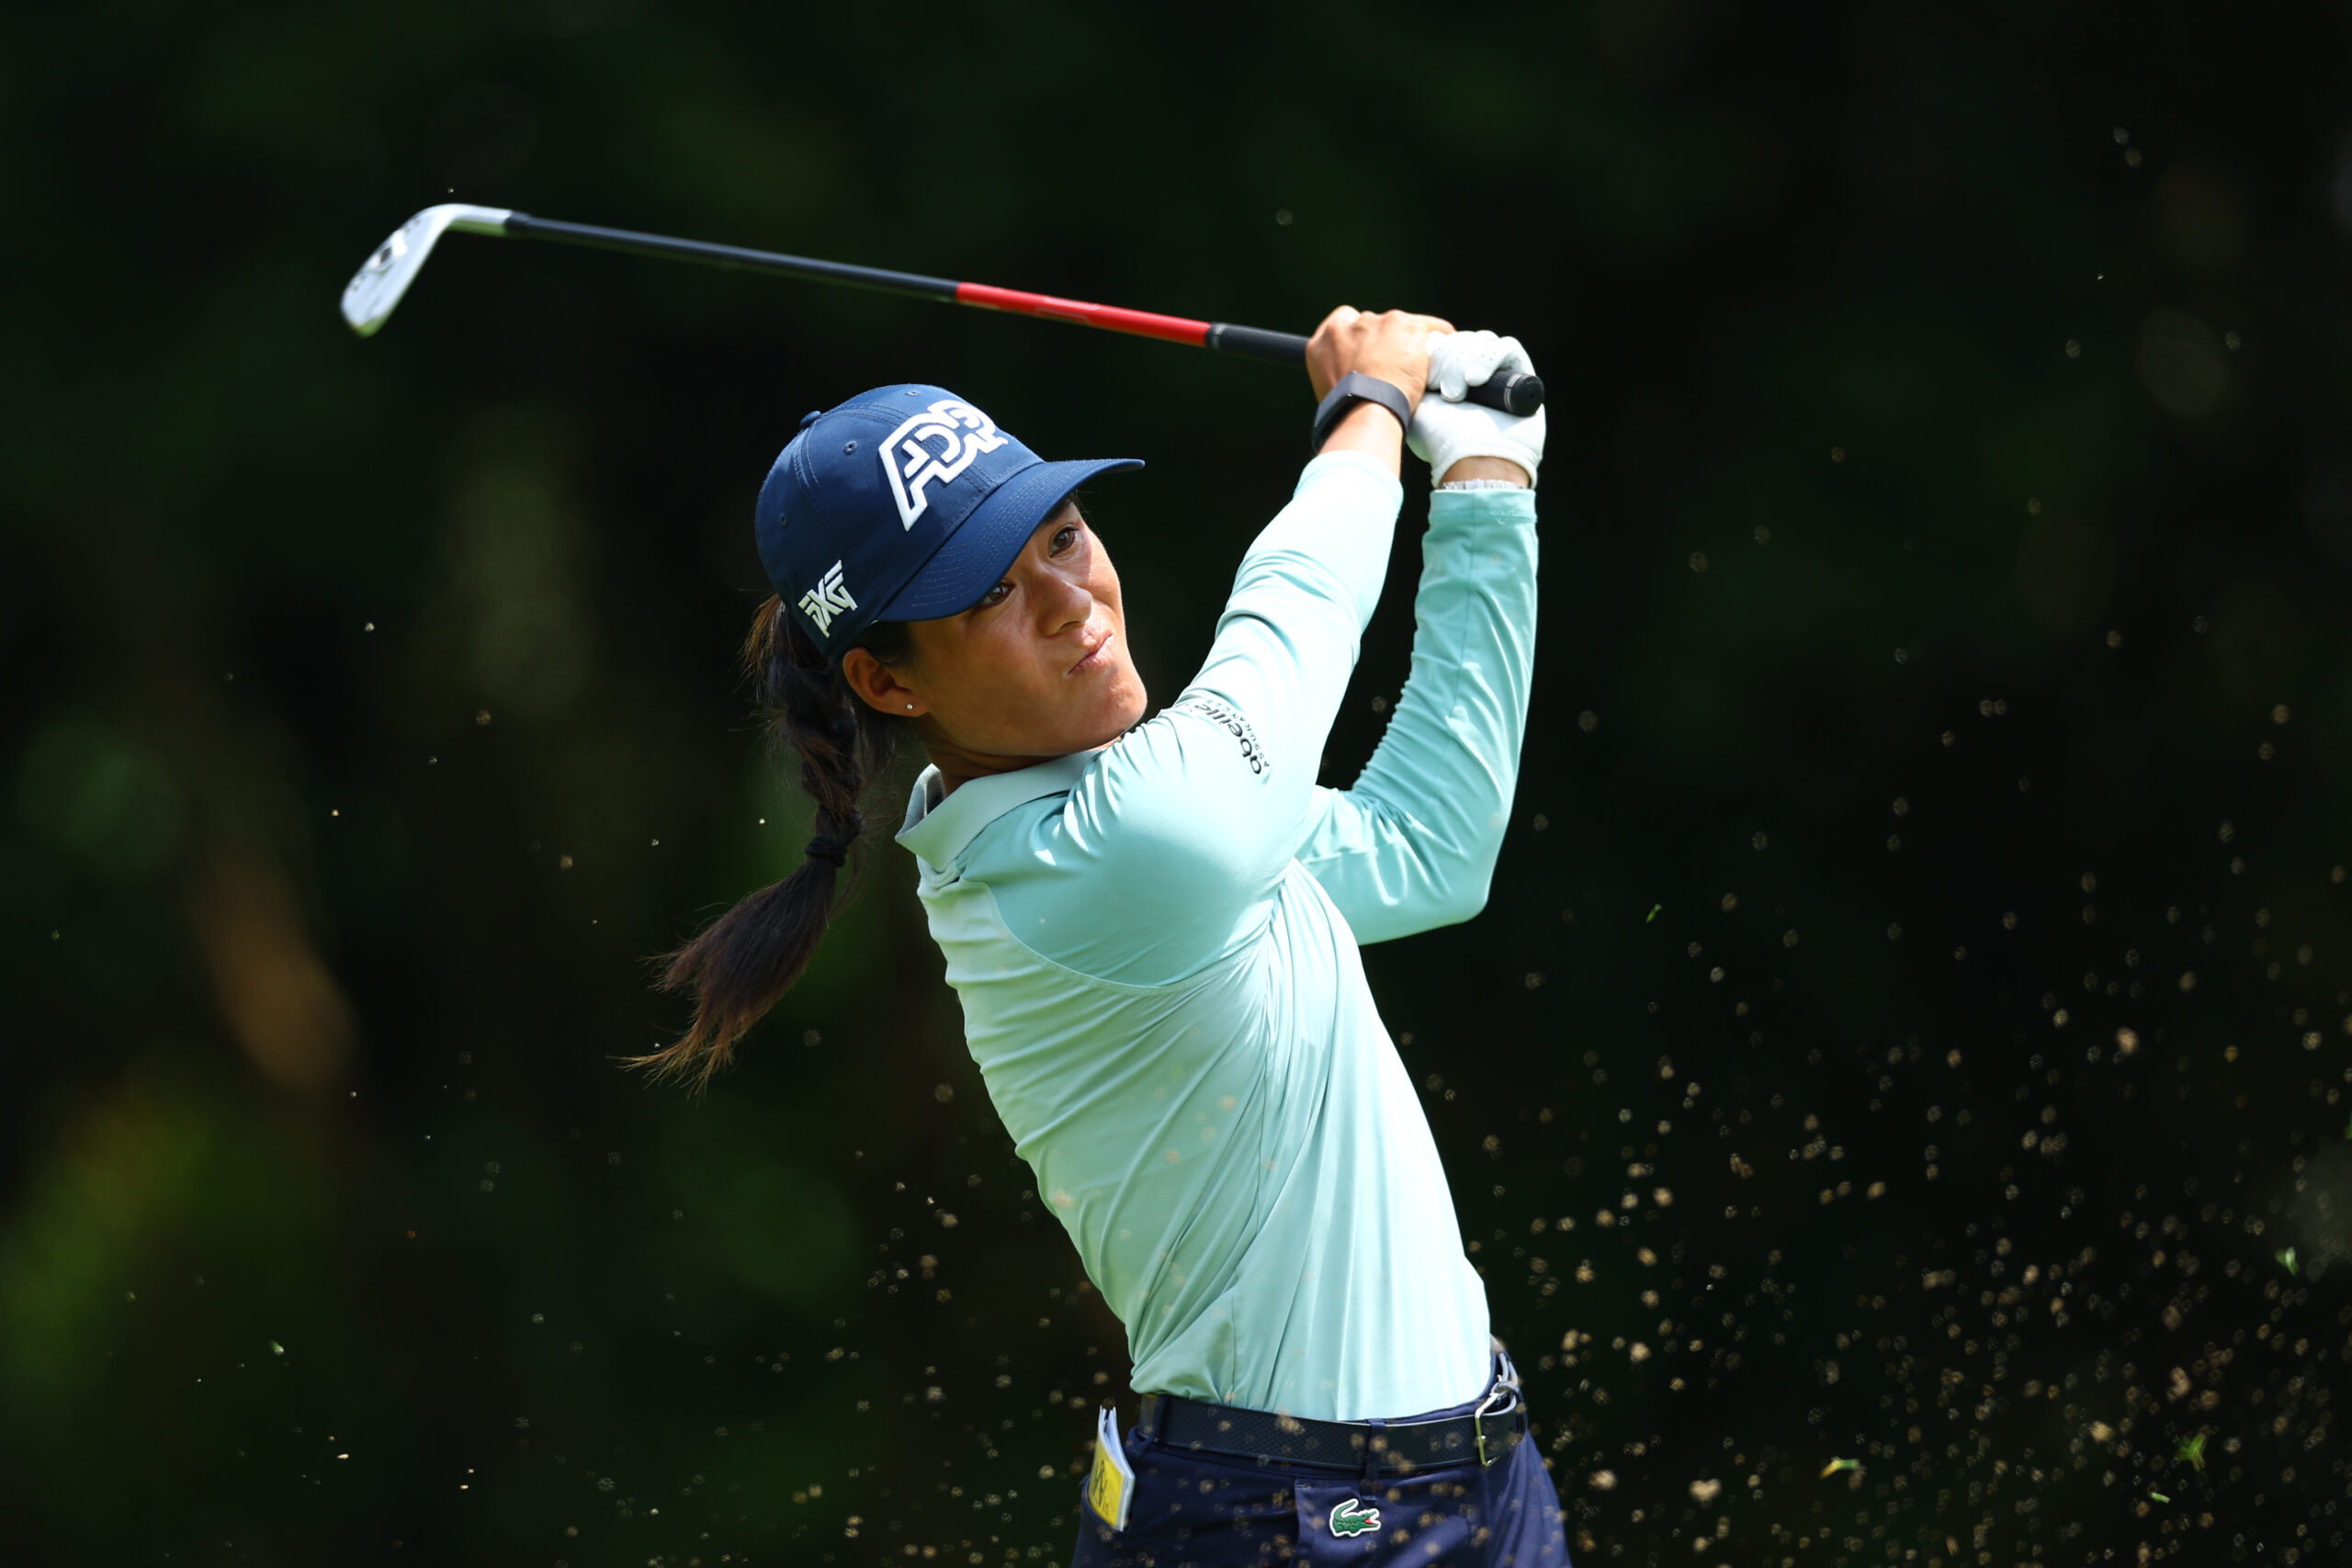 Celine Boutier, Rose Zhang within striking distance at LPGA’s Maybank Championship